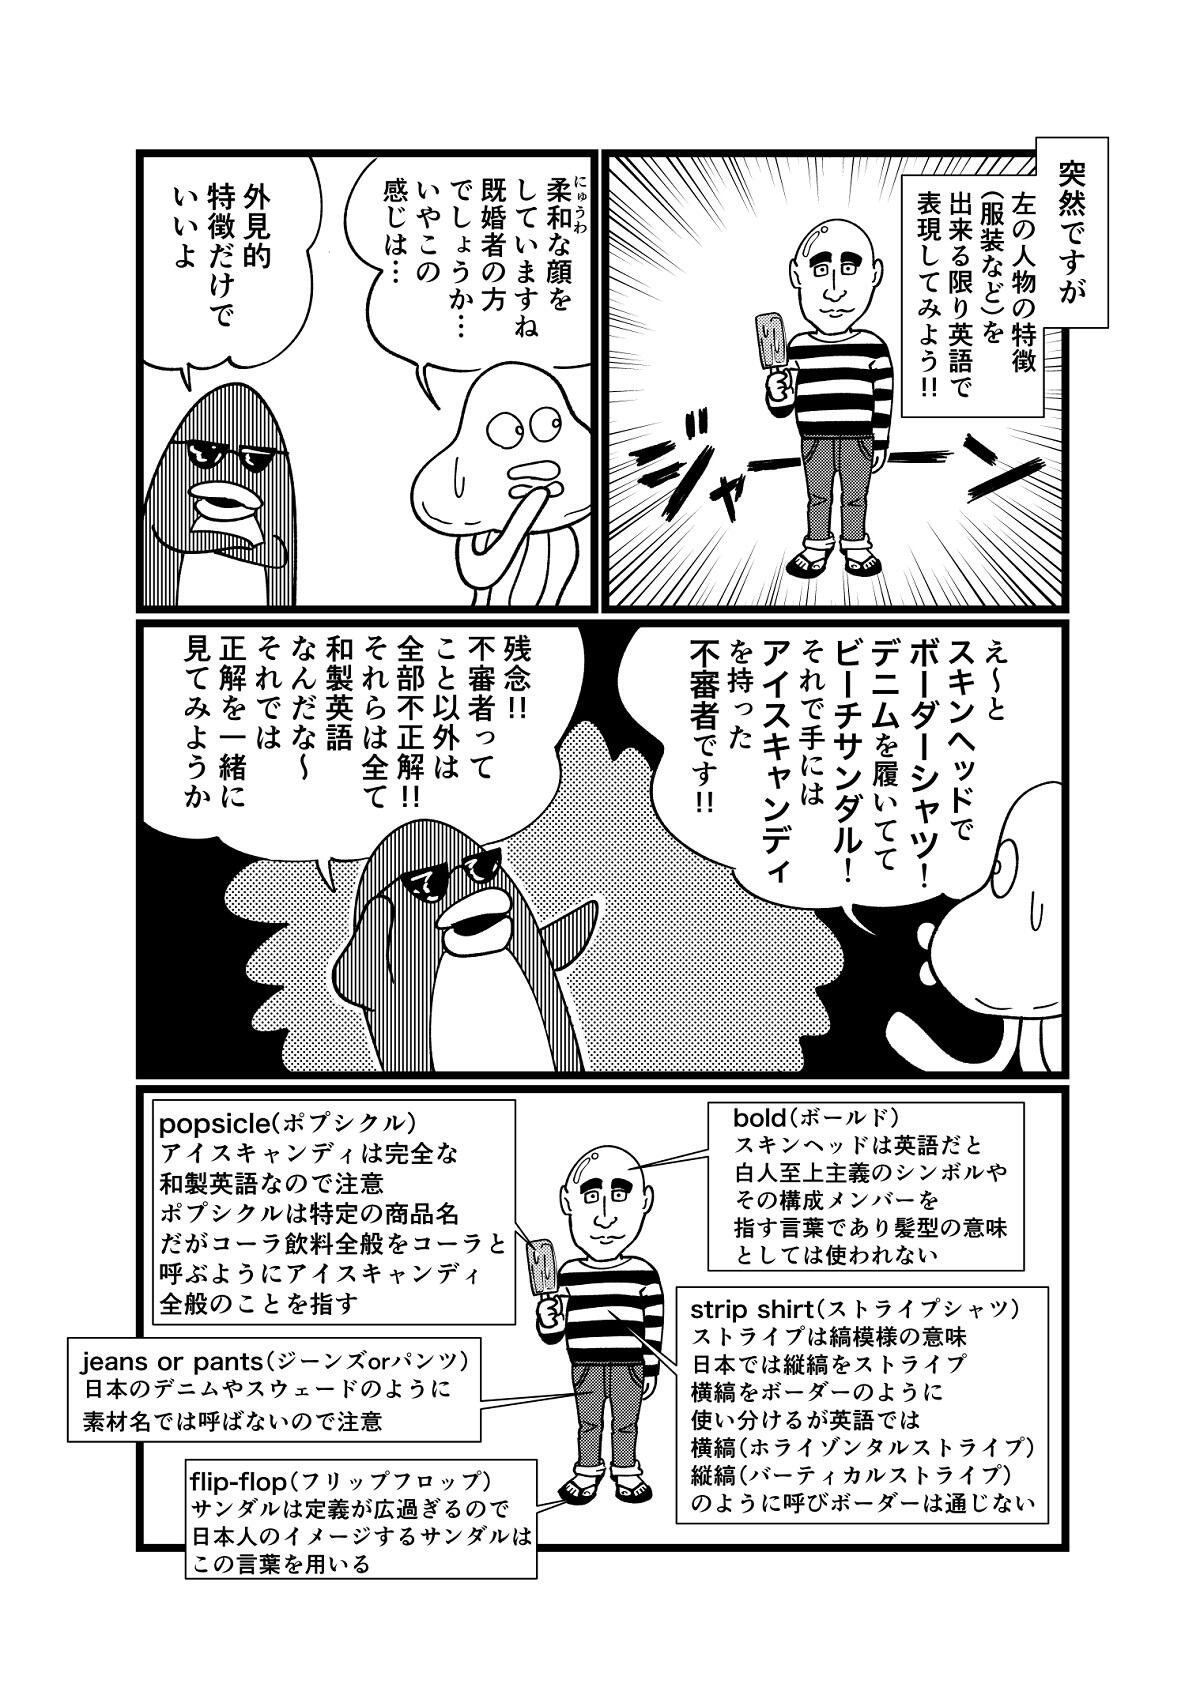 https://www.ryugaku.co.jp/column/images/jawamura11_2_1200.jpg